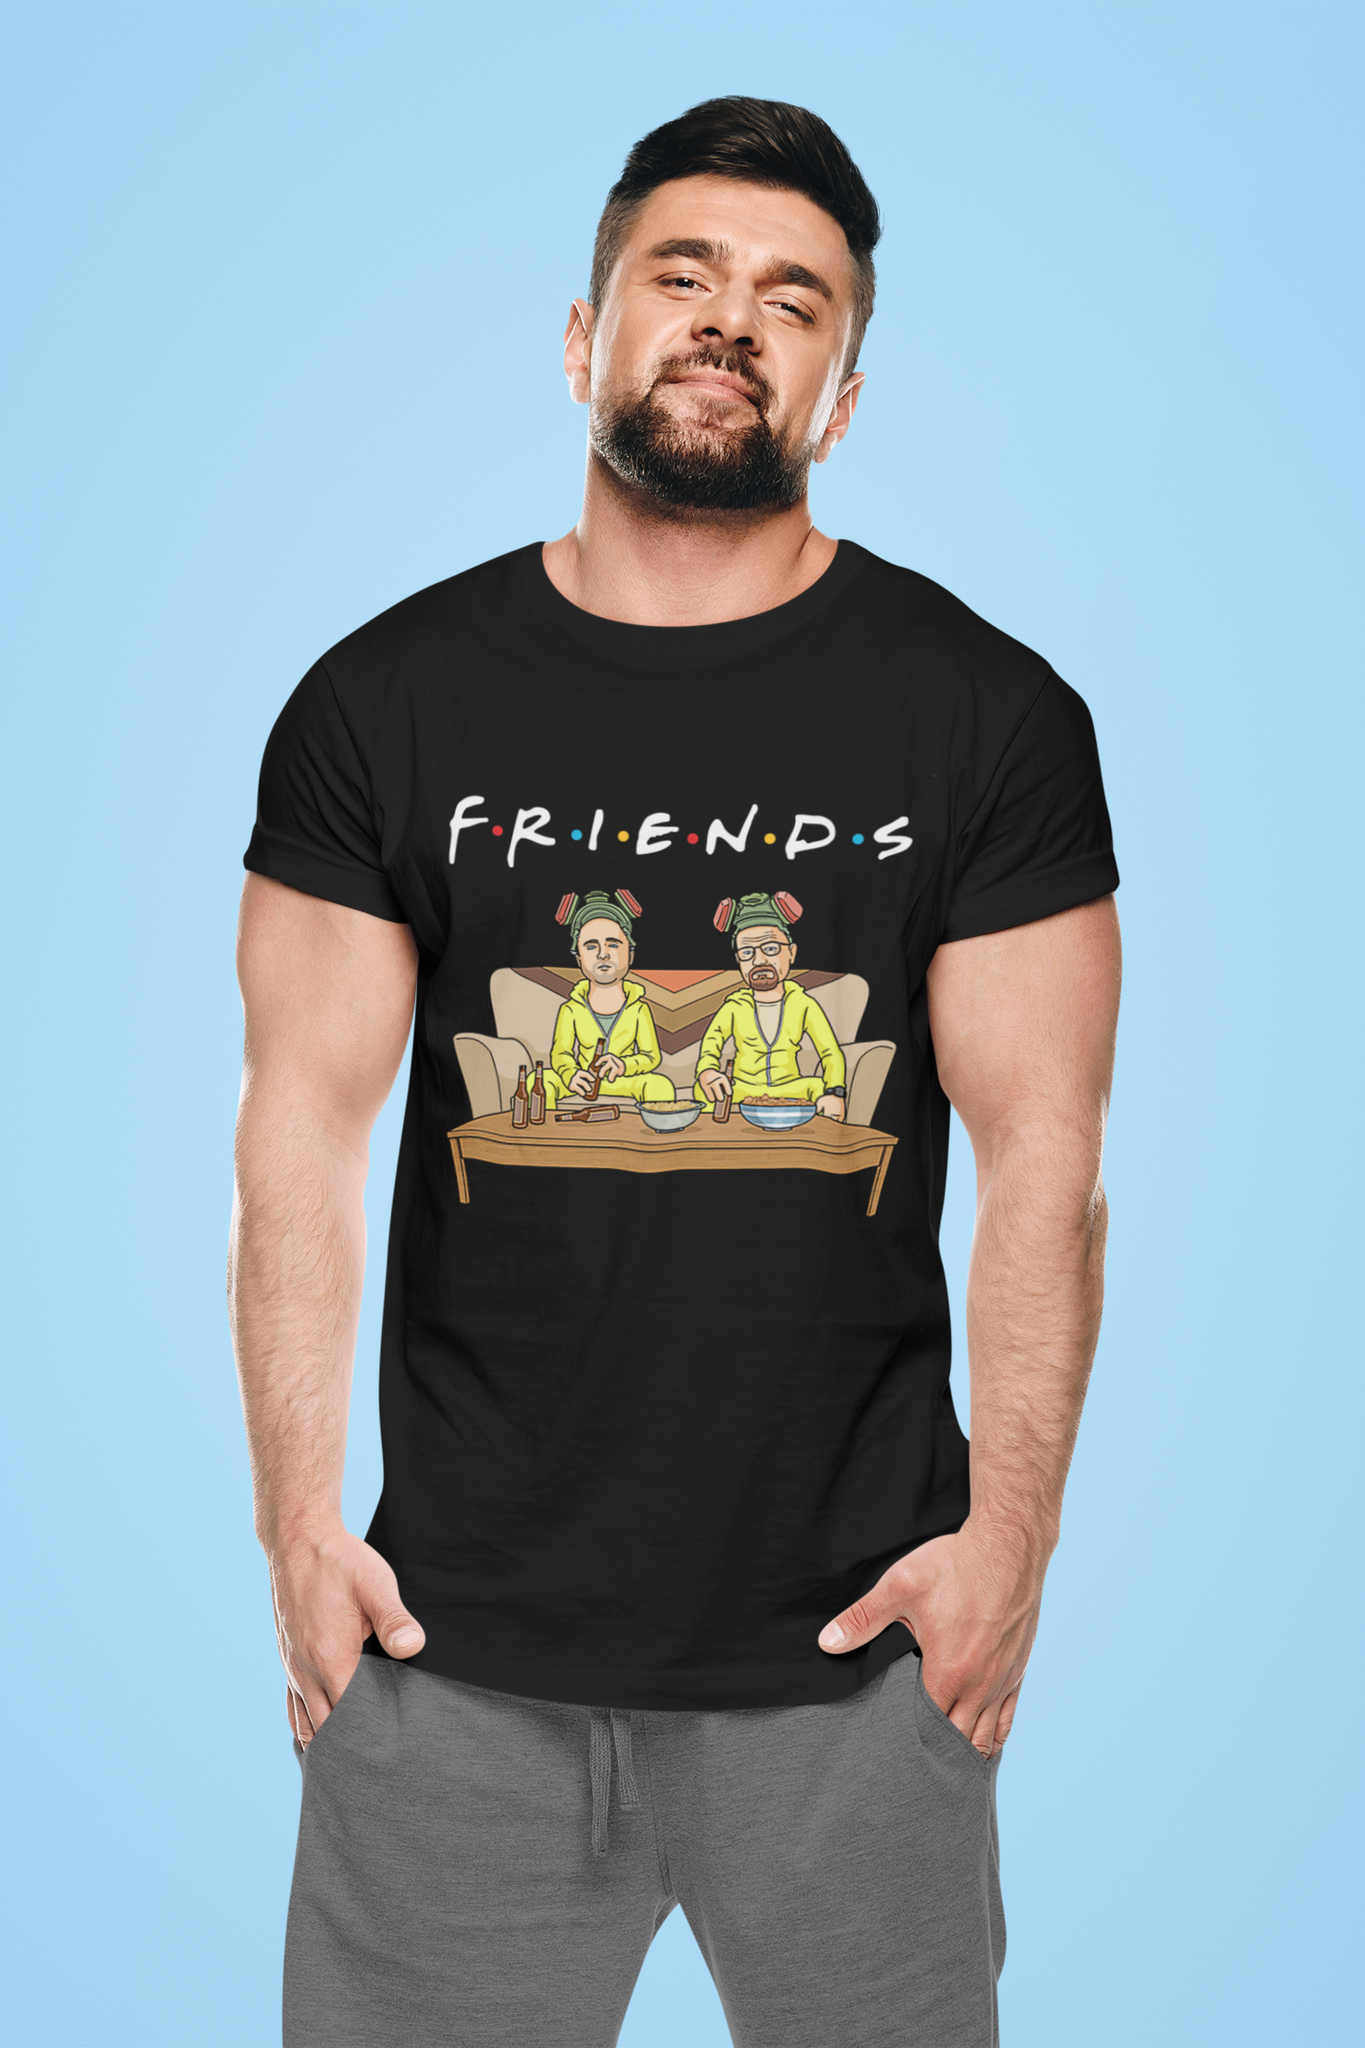 Breaking Bad T Shirt, Jesse Pinkman Walter White Shirt, Friends Tshirt